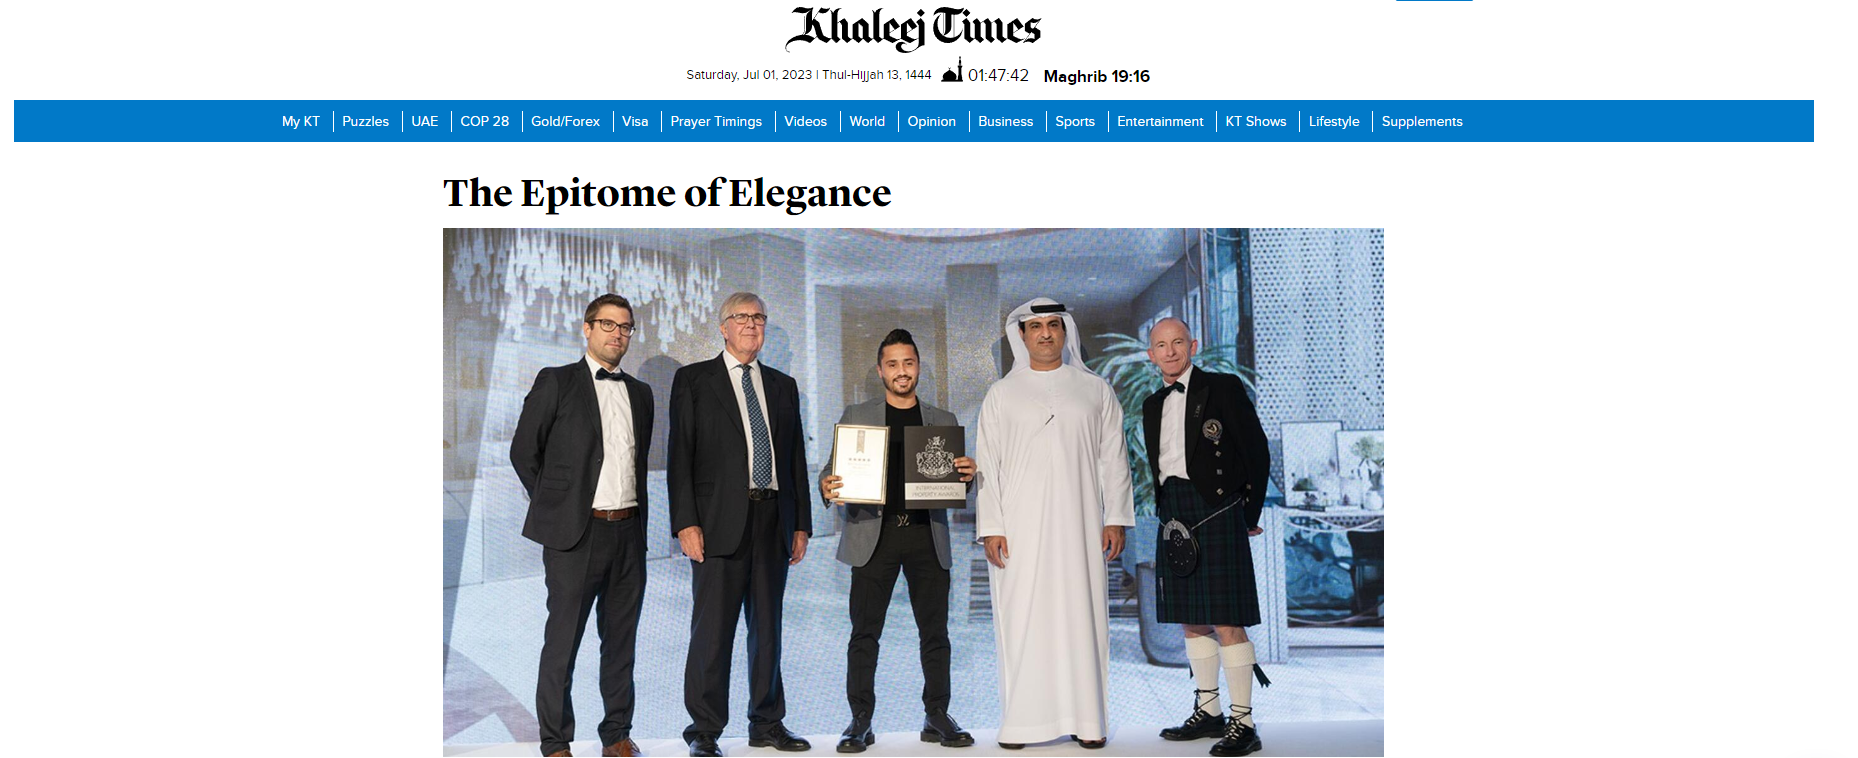 Khaleej Times: The Epitome of Elegance